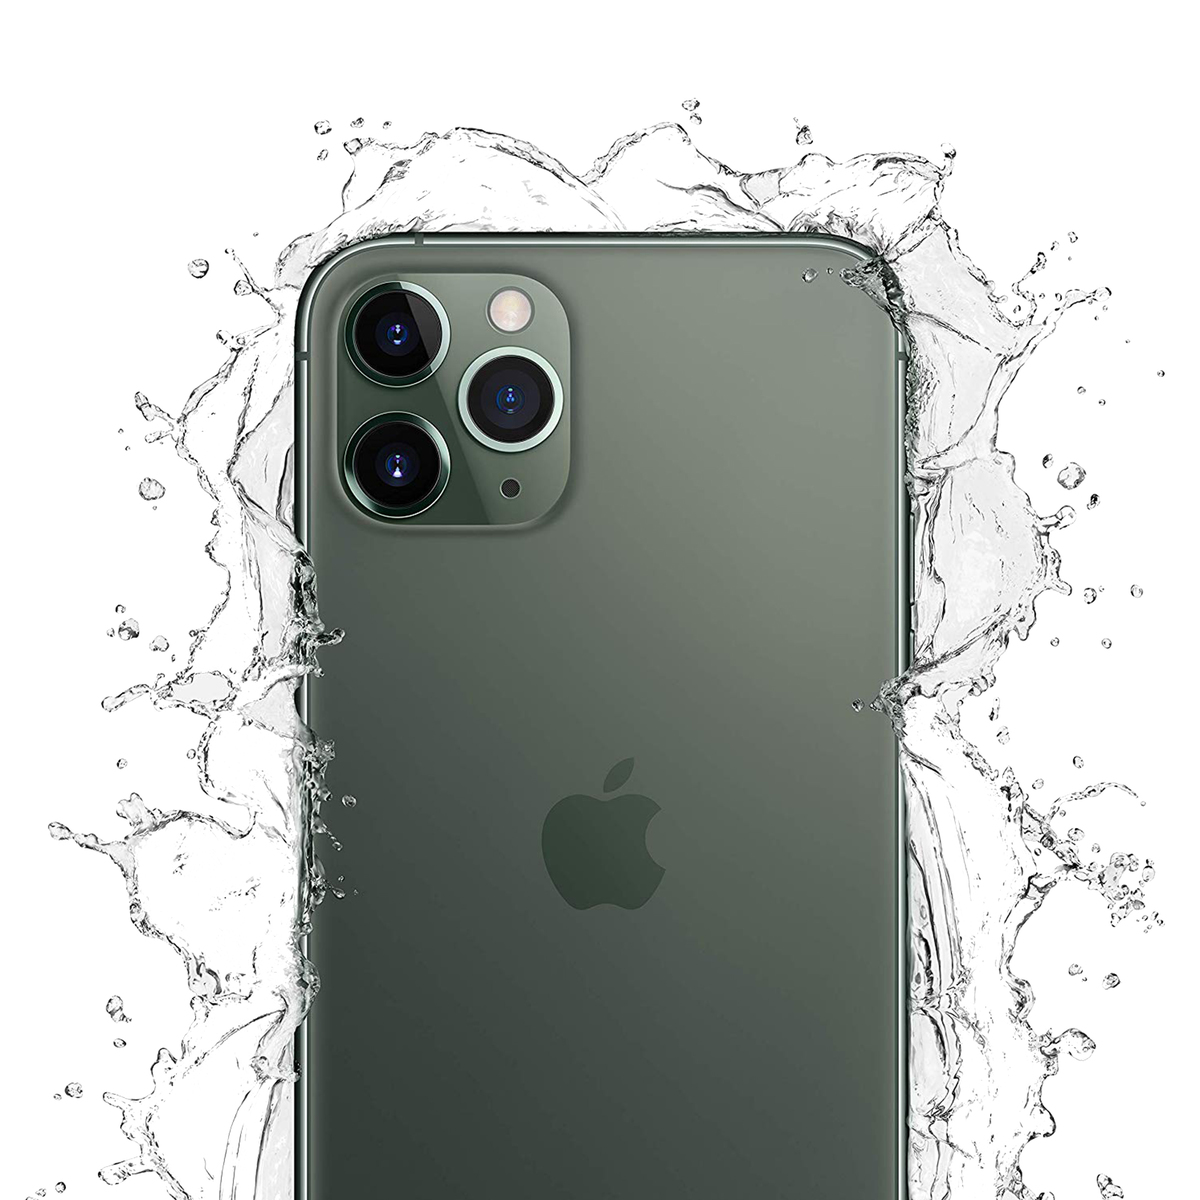 Apple iPhone 11 Pro Max 512GB Midnight green